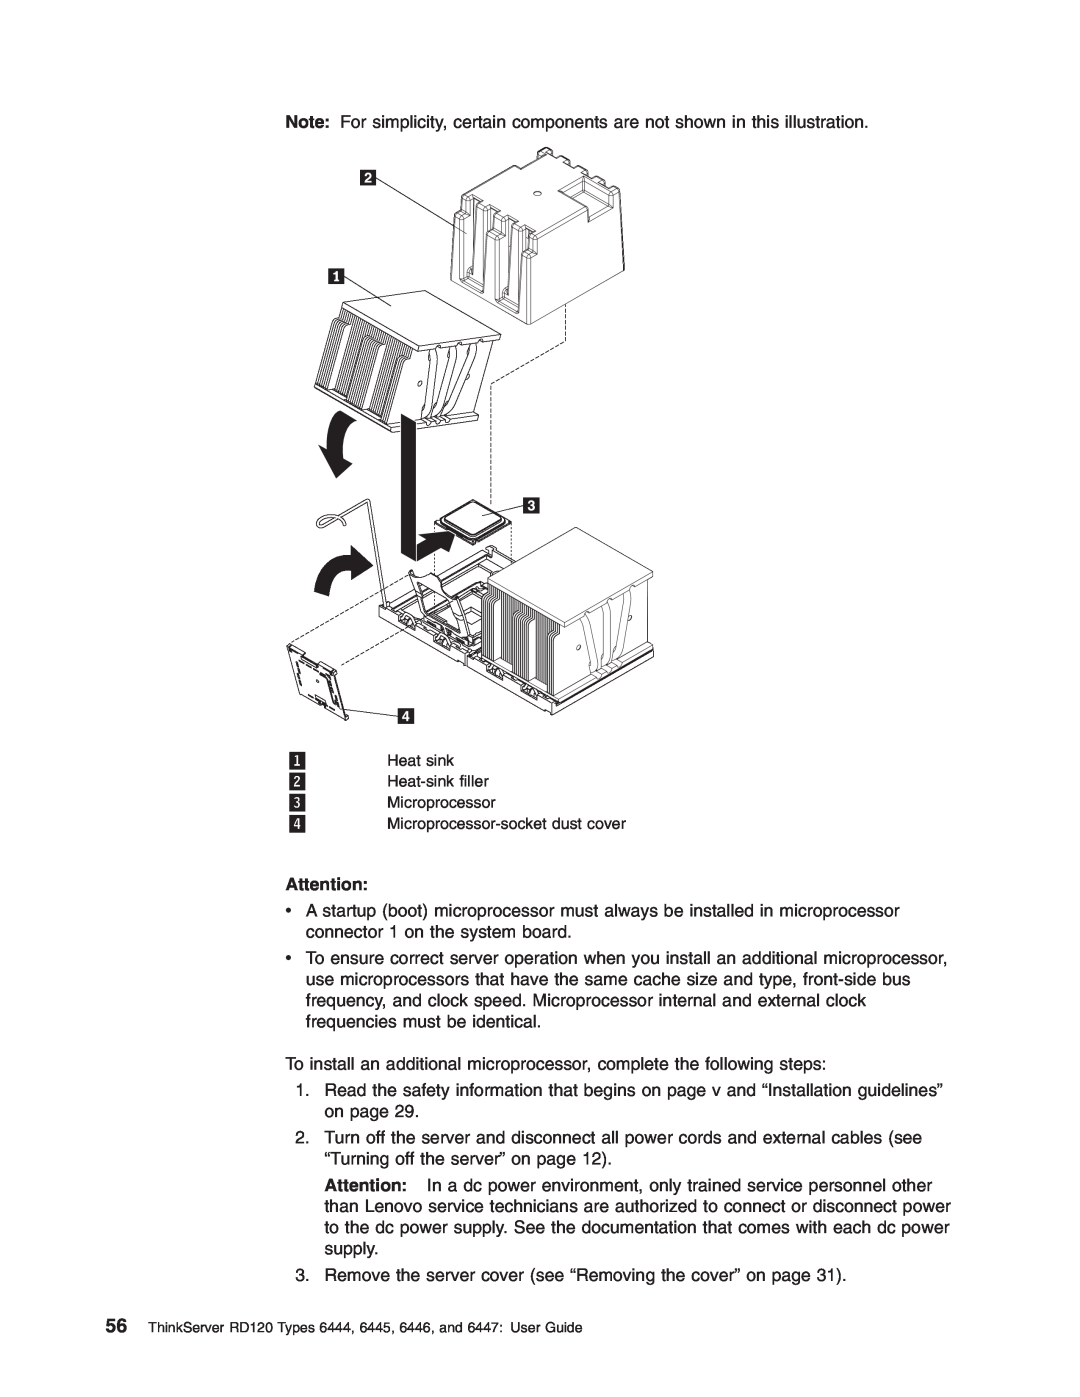 Lenovo RD120 manual Microprocessor-socketdust cover 